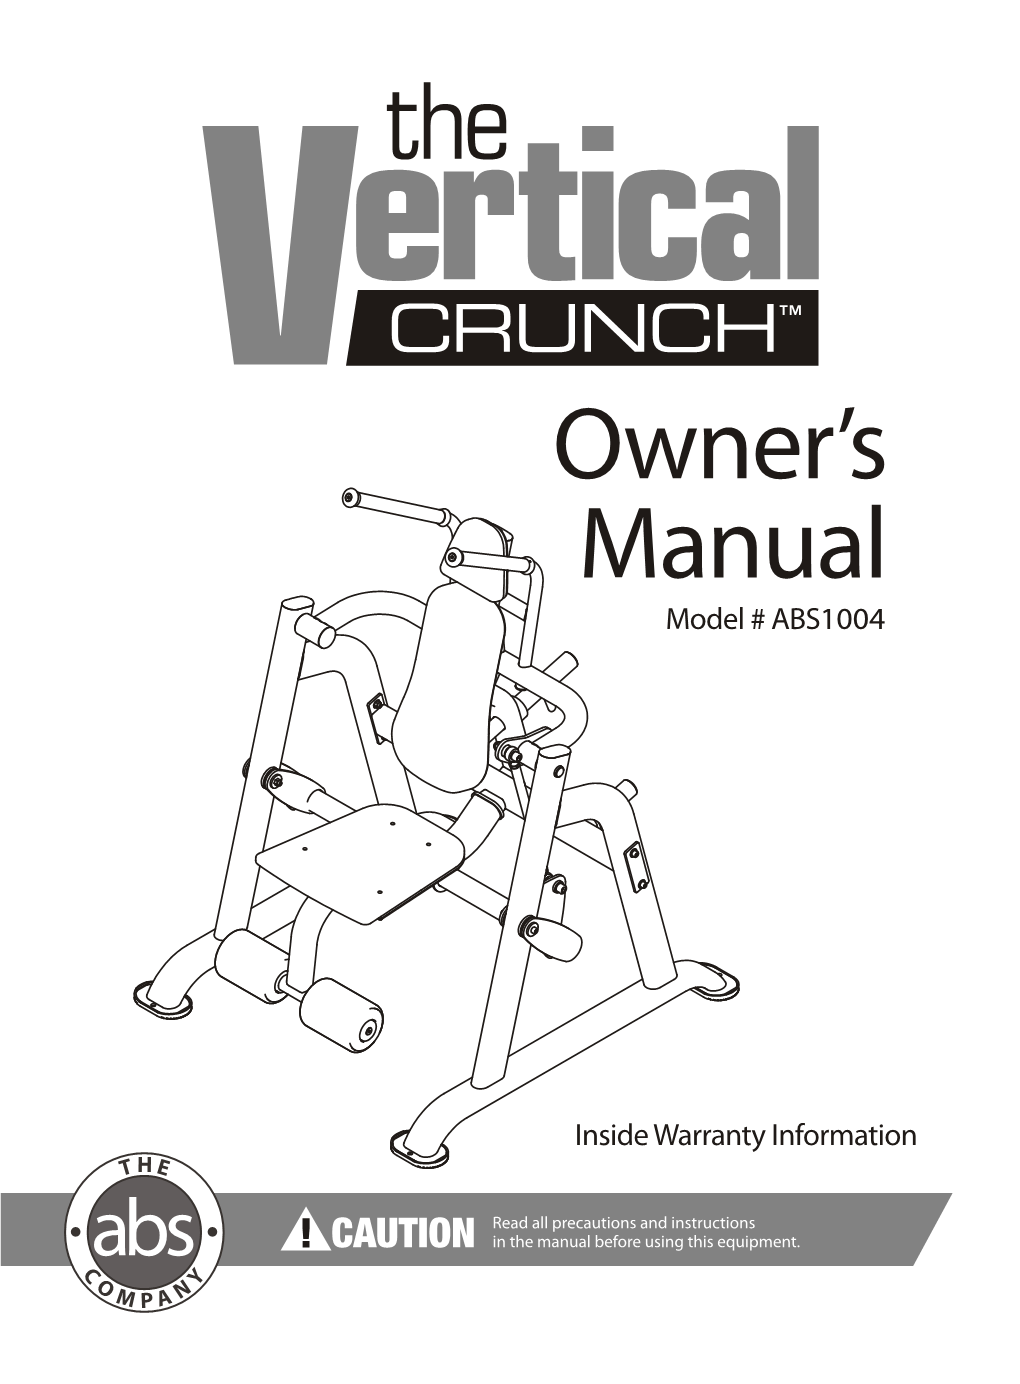 The Vertical Crunch™ Manual